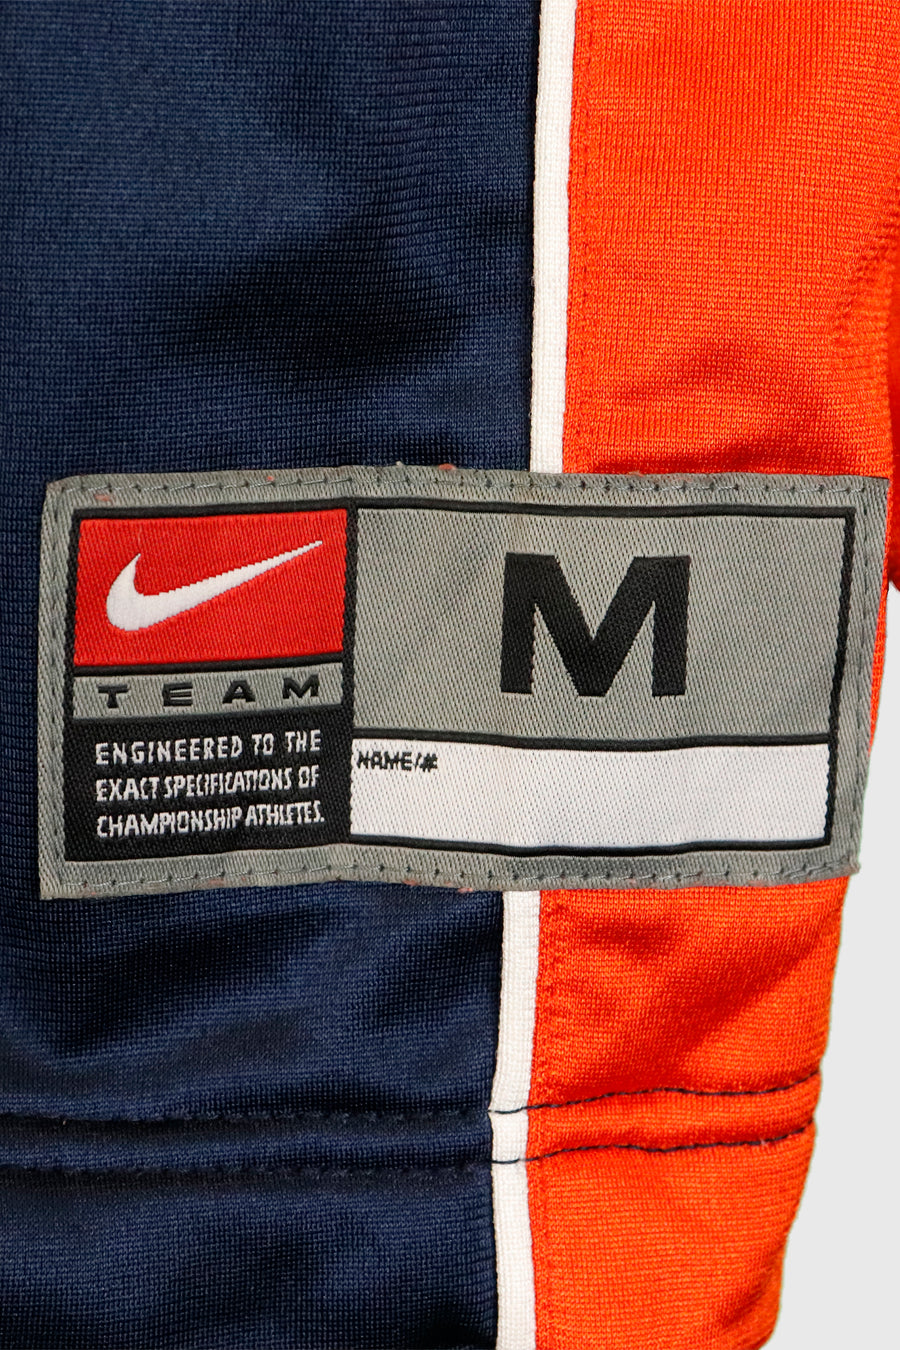 Vintage Nike Team Syracuse Patch Warm Up Jacket Sz M